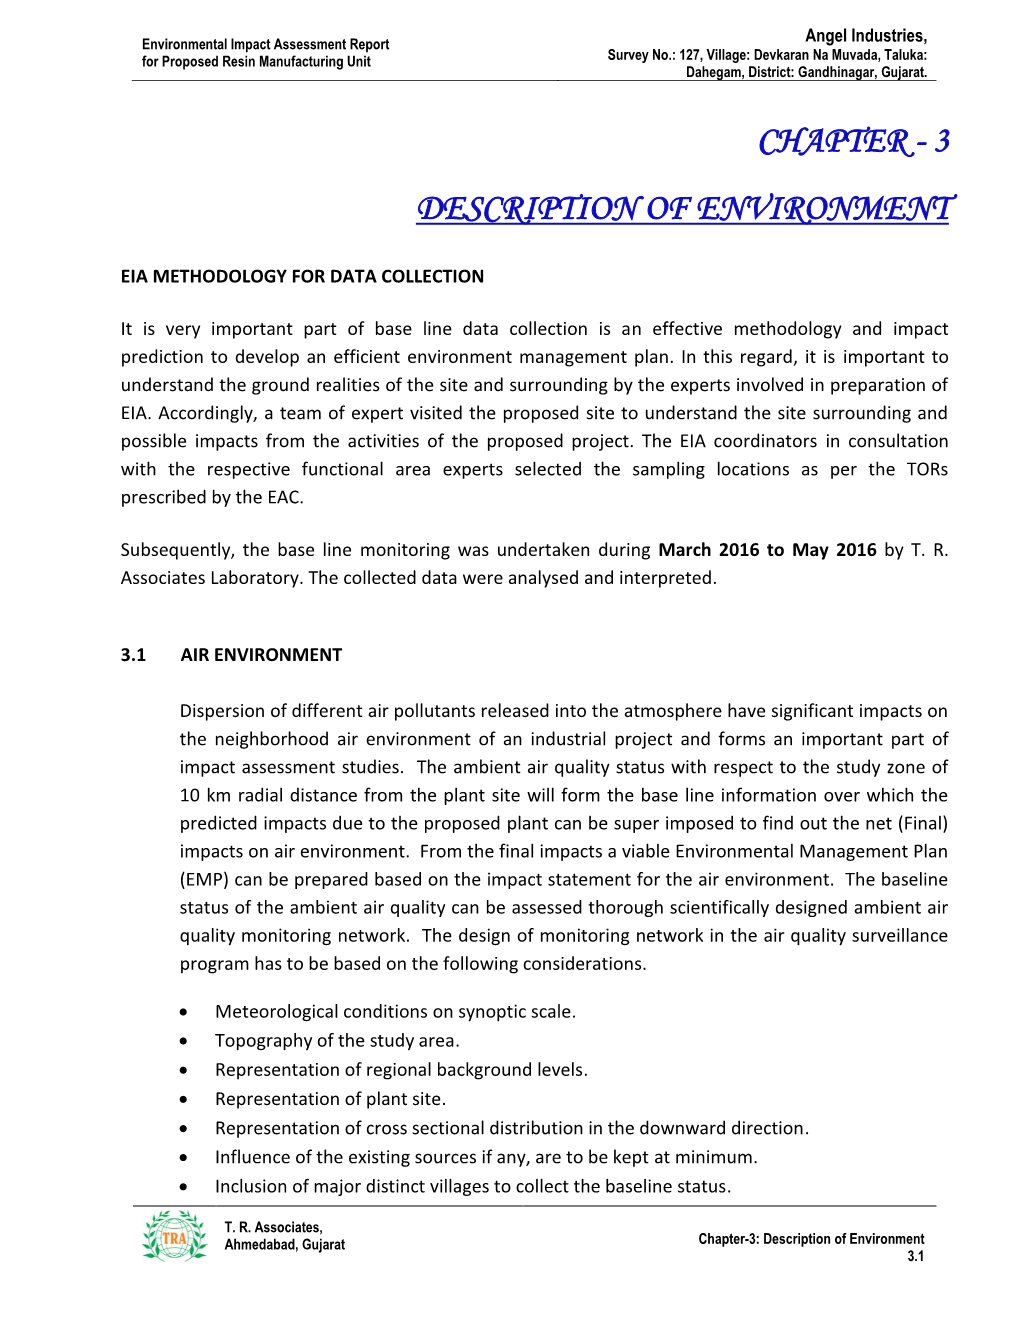 Chapter - 3 Description of Environment